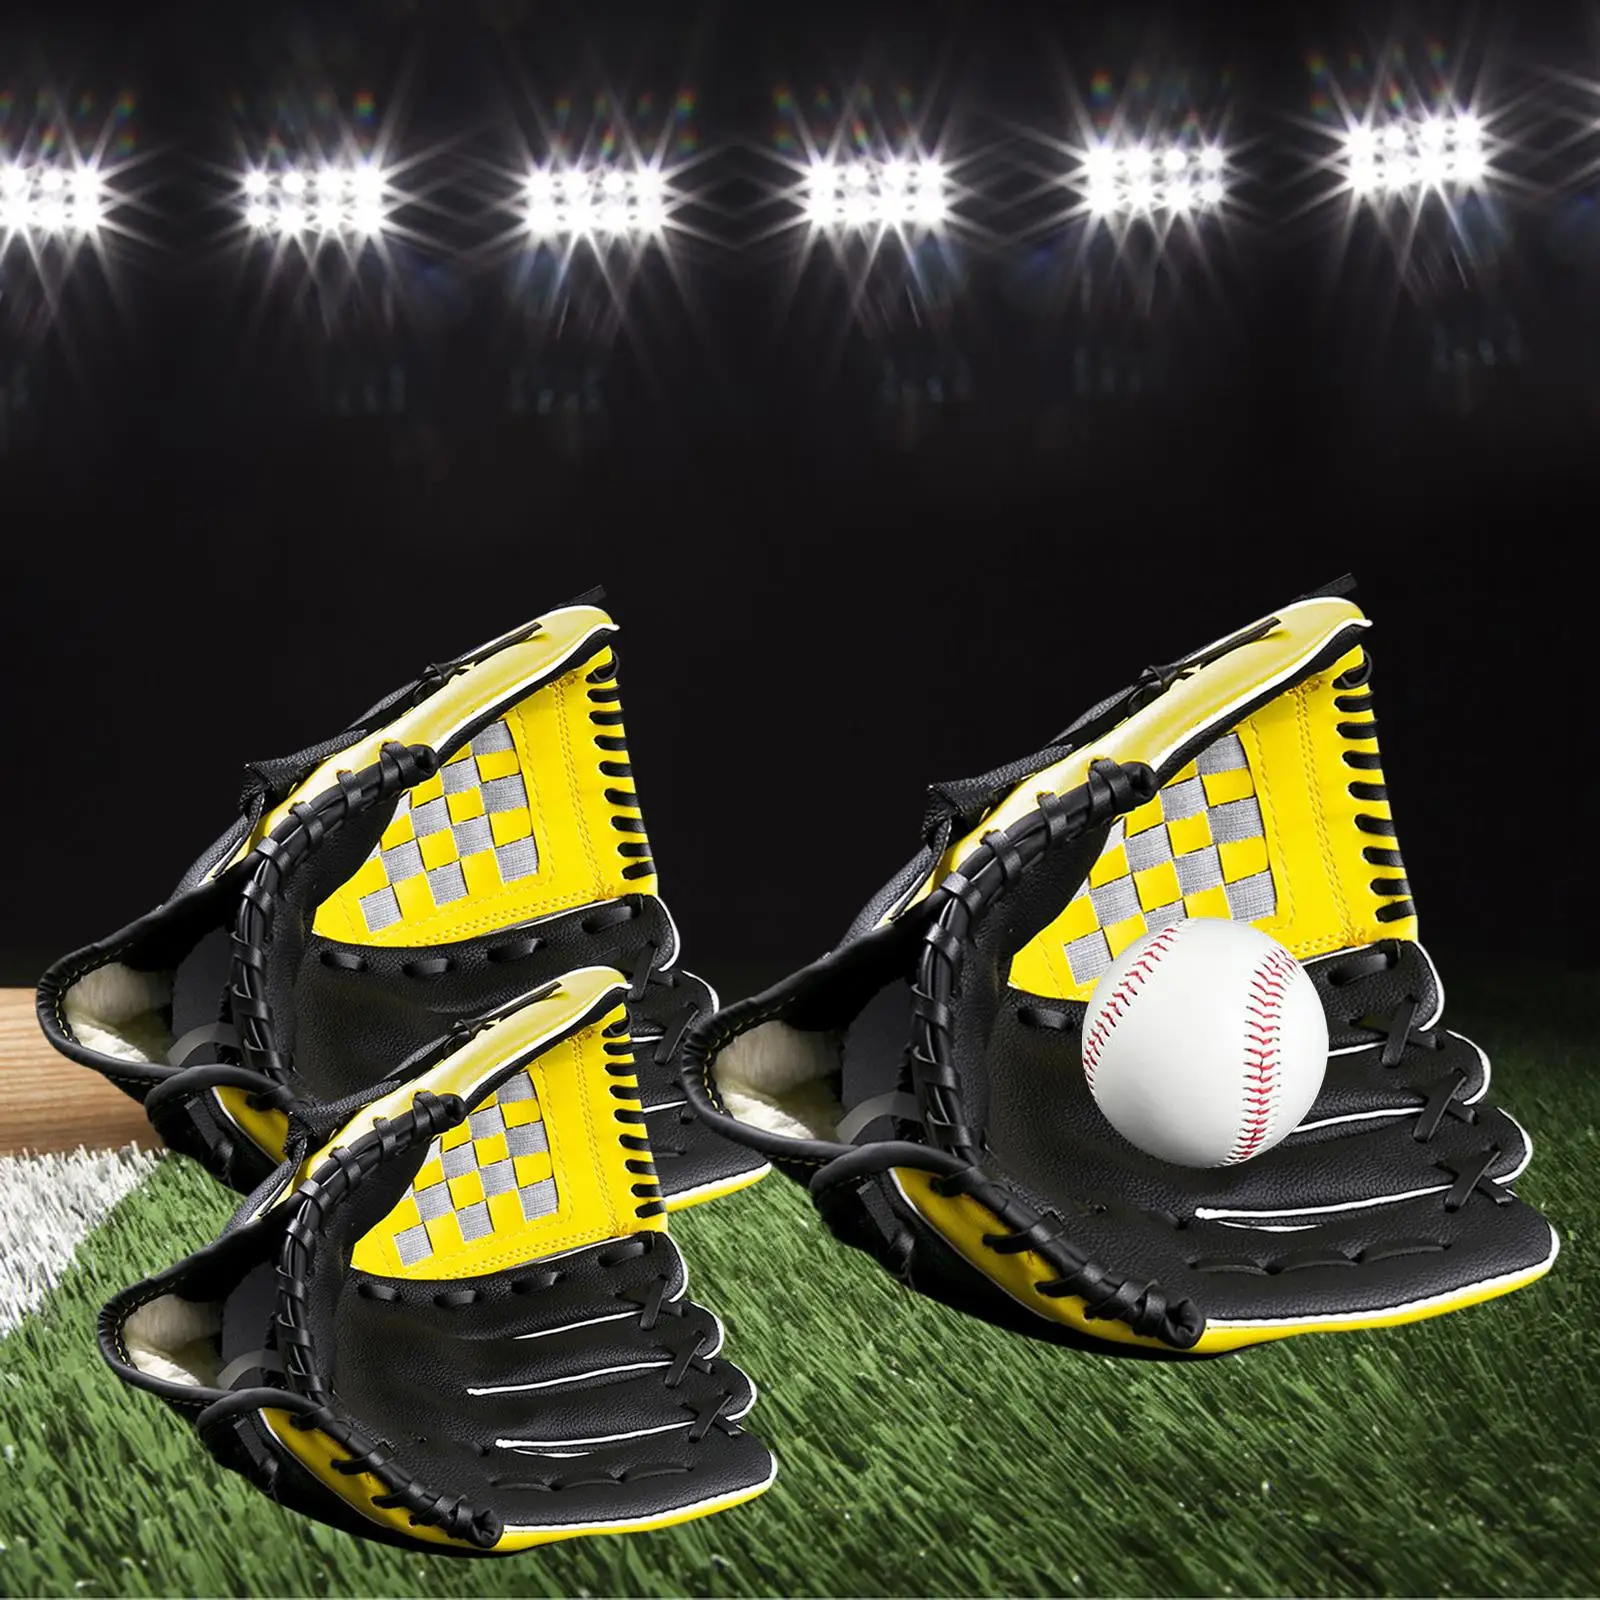 Professional Baseball Glove Portable Softball Glove Durable PU Left Hand Throw for Exercise Training Practice Equipment